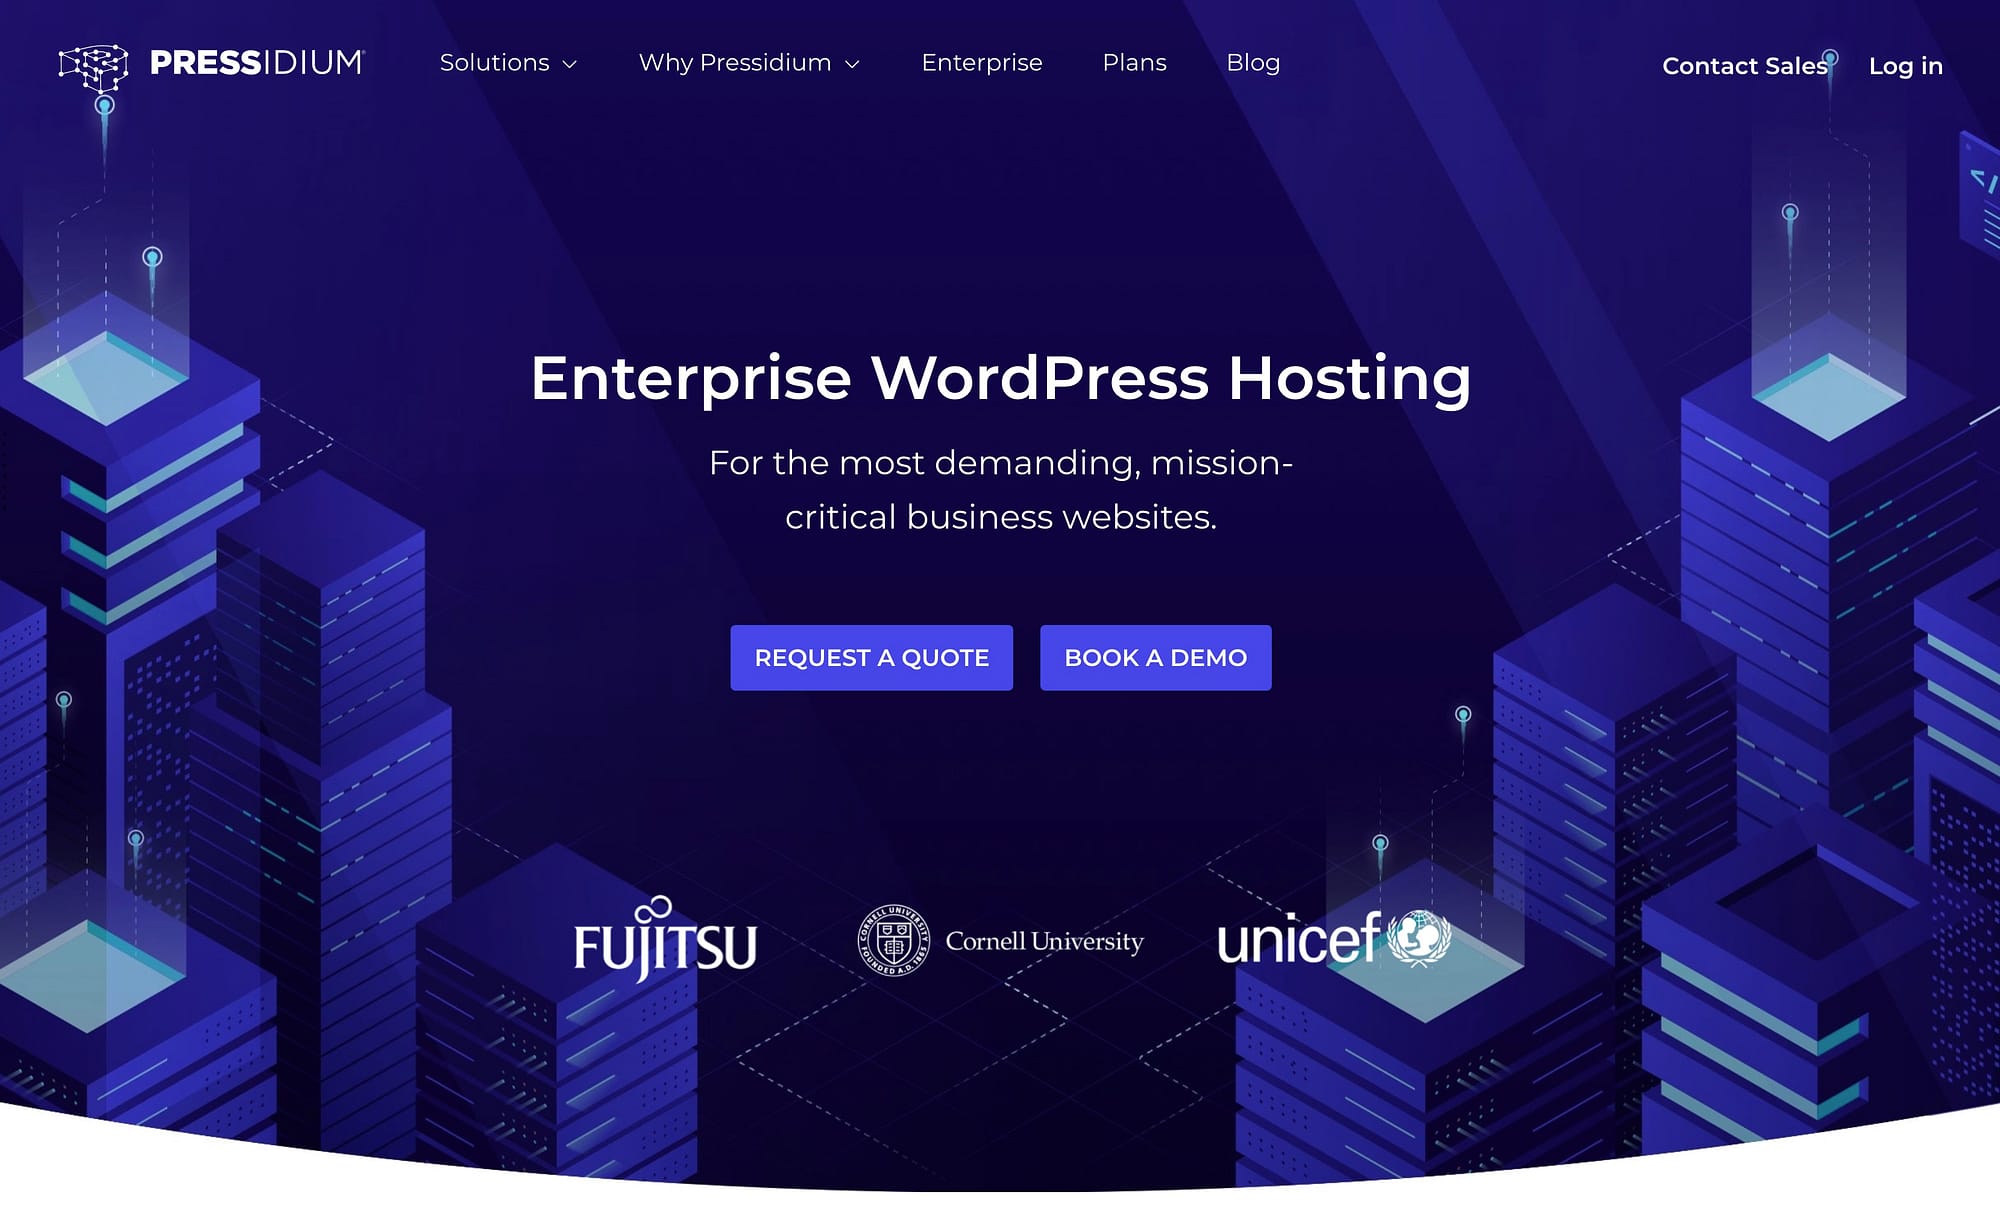 Pressidium is one of the best enterprise WordPress hosting providers for high-availability hosting.